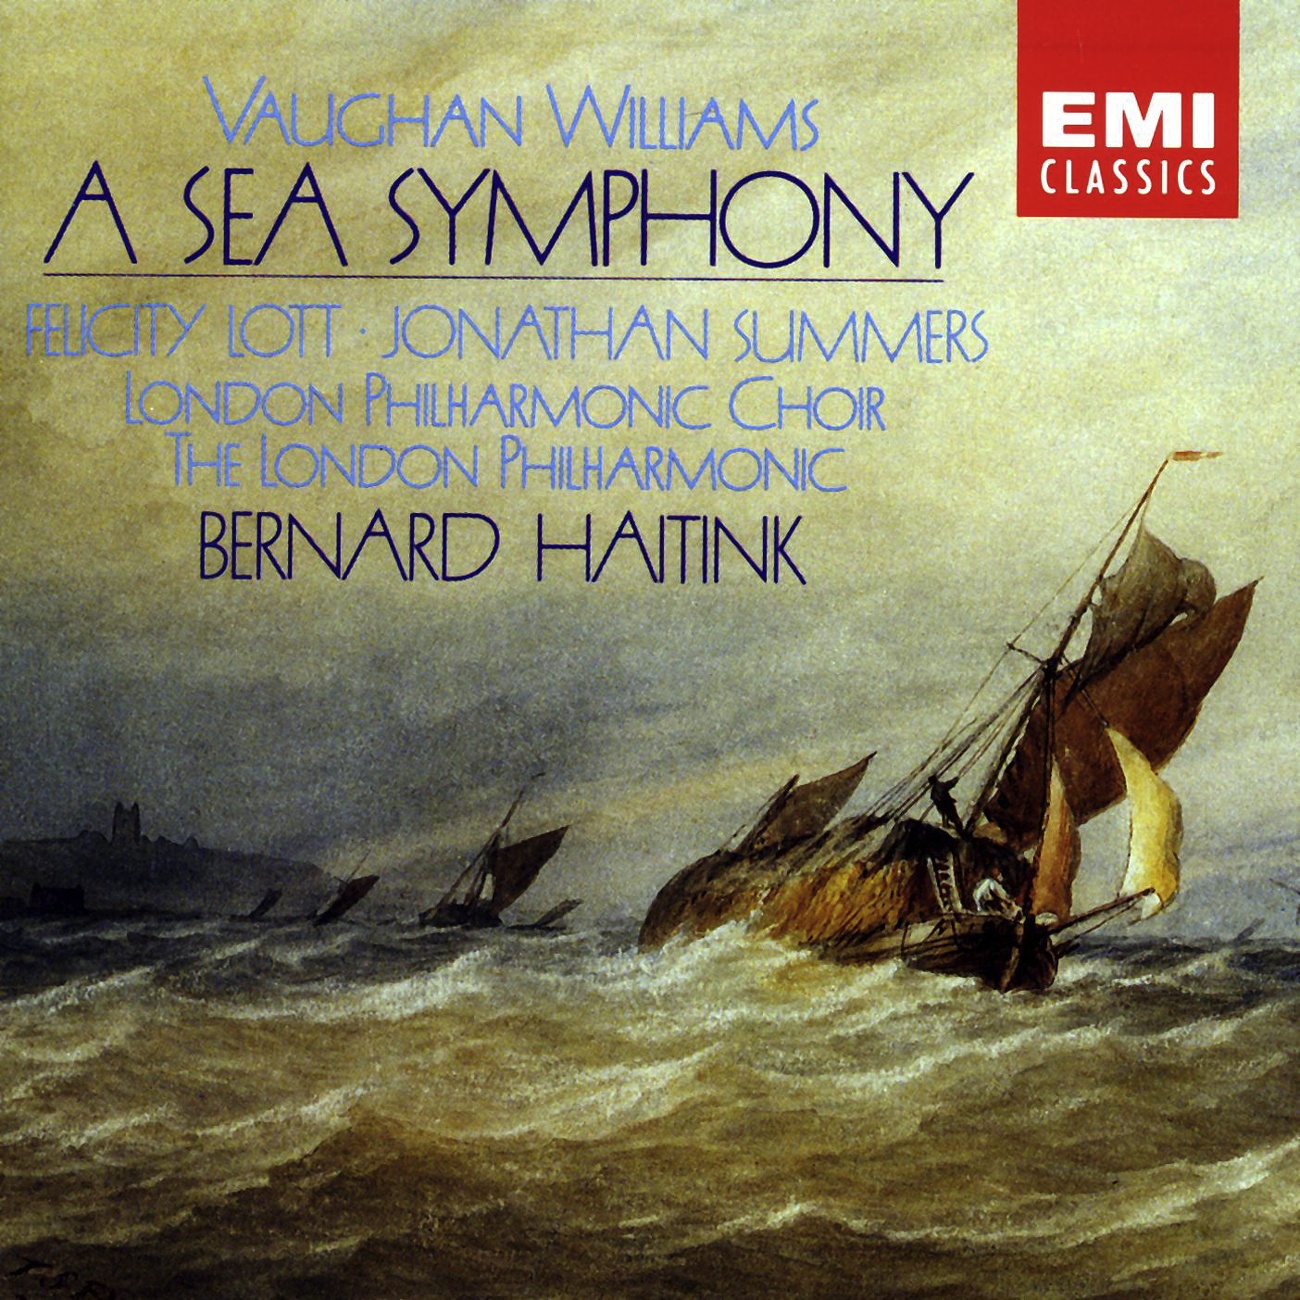 Vaughan Williams: A Sea Symphony: II. On the Beach At Night, Alone, A Vast Similitude Interlocks All